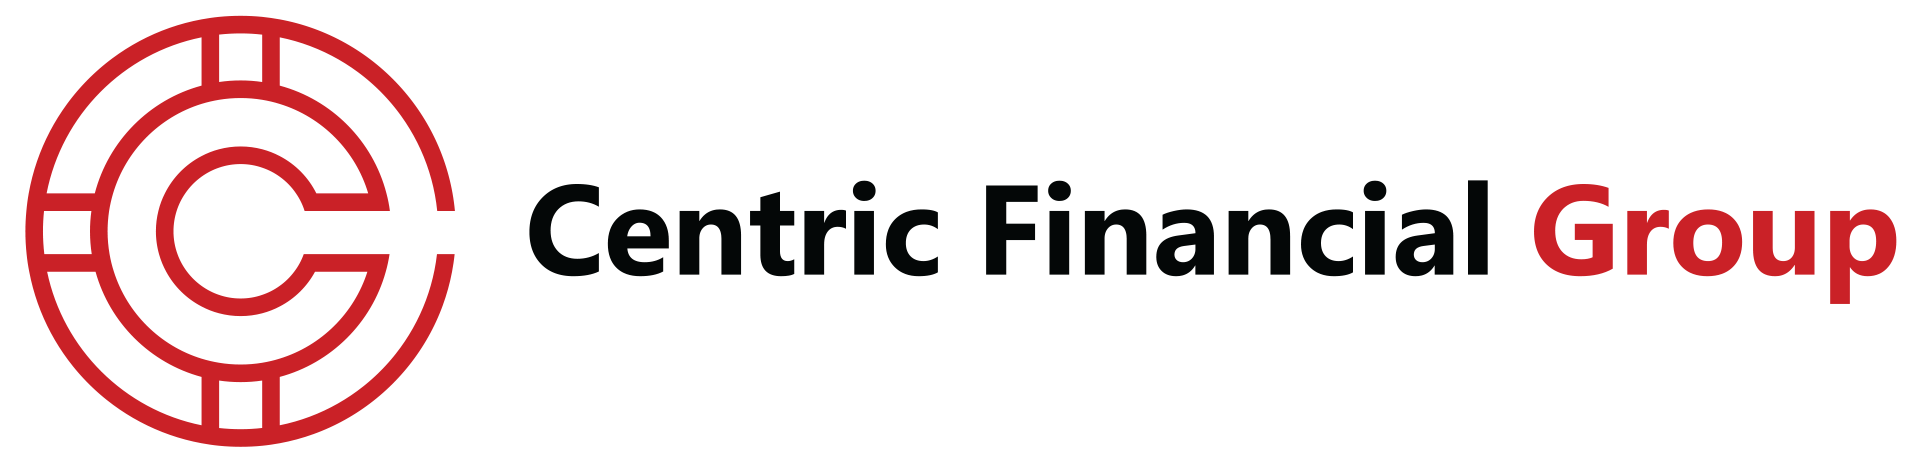 centric-financial-group-logo